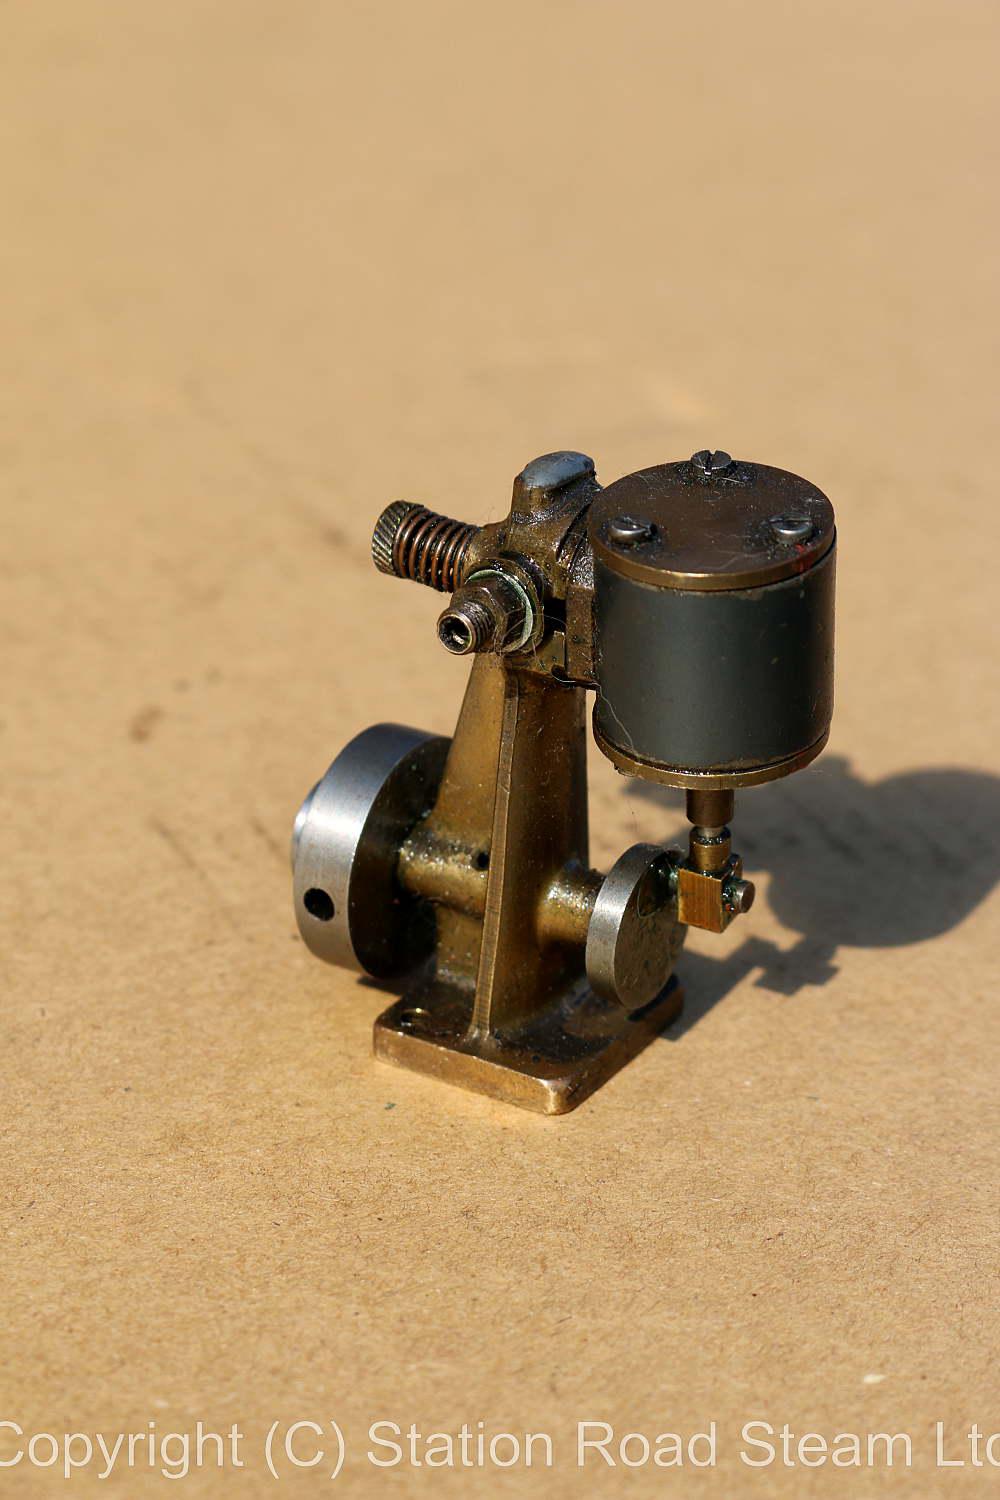 Very small single cylinder oscillating engine